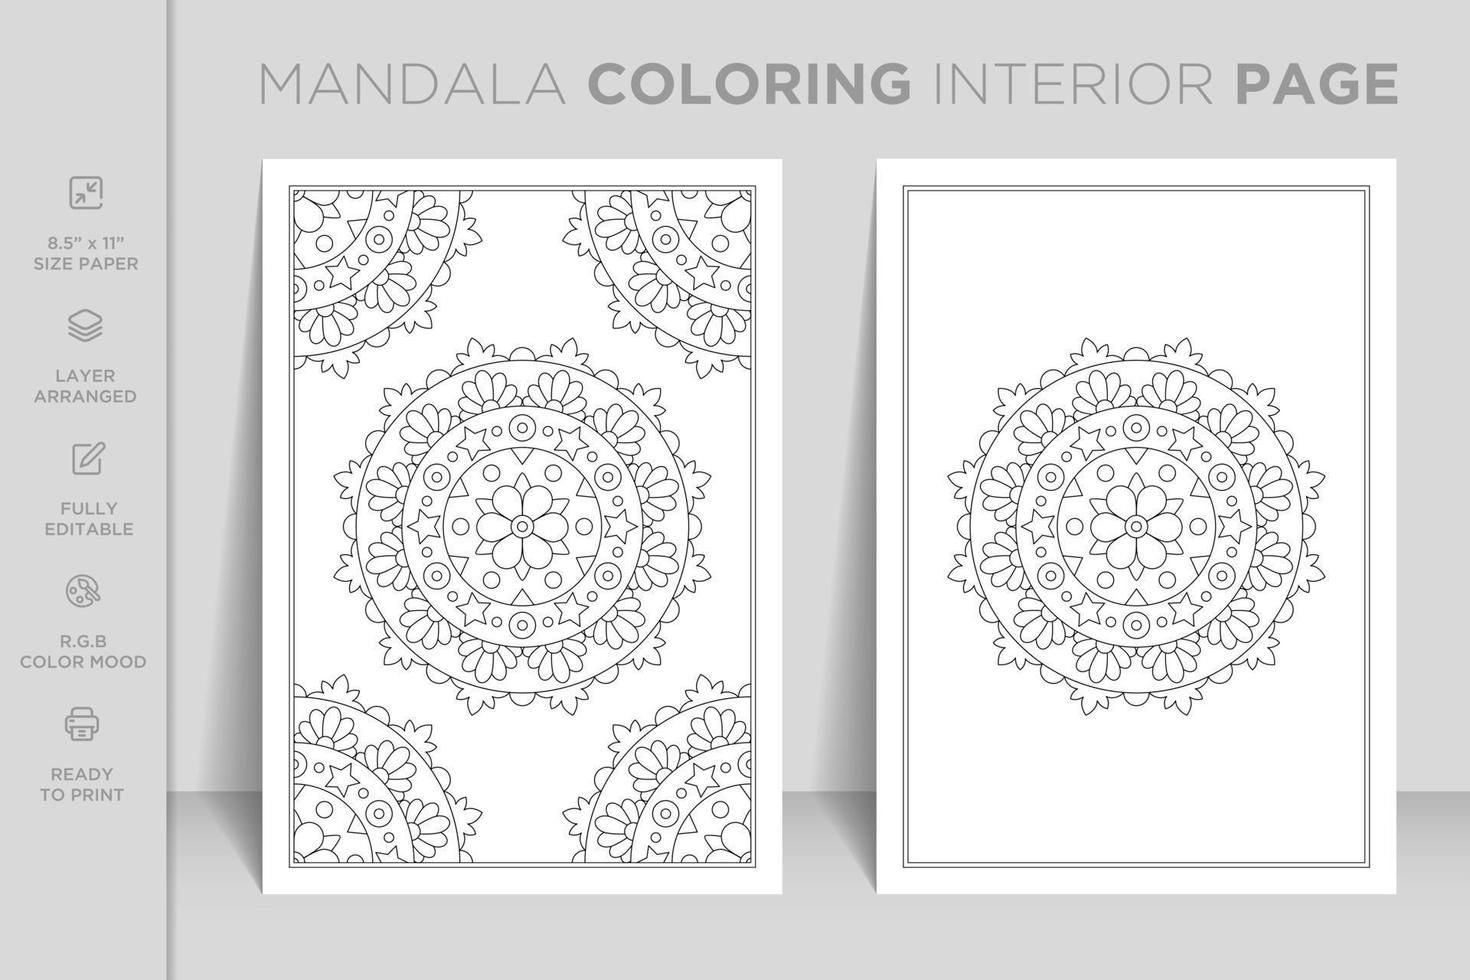 Ready to print complete mandala coloring book interior page. Luxury ornamental mandala design. vector